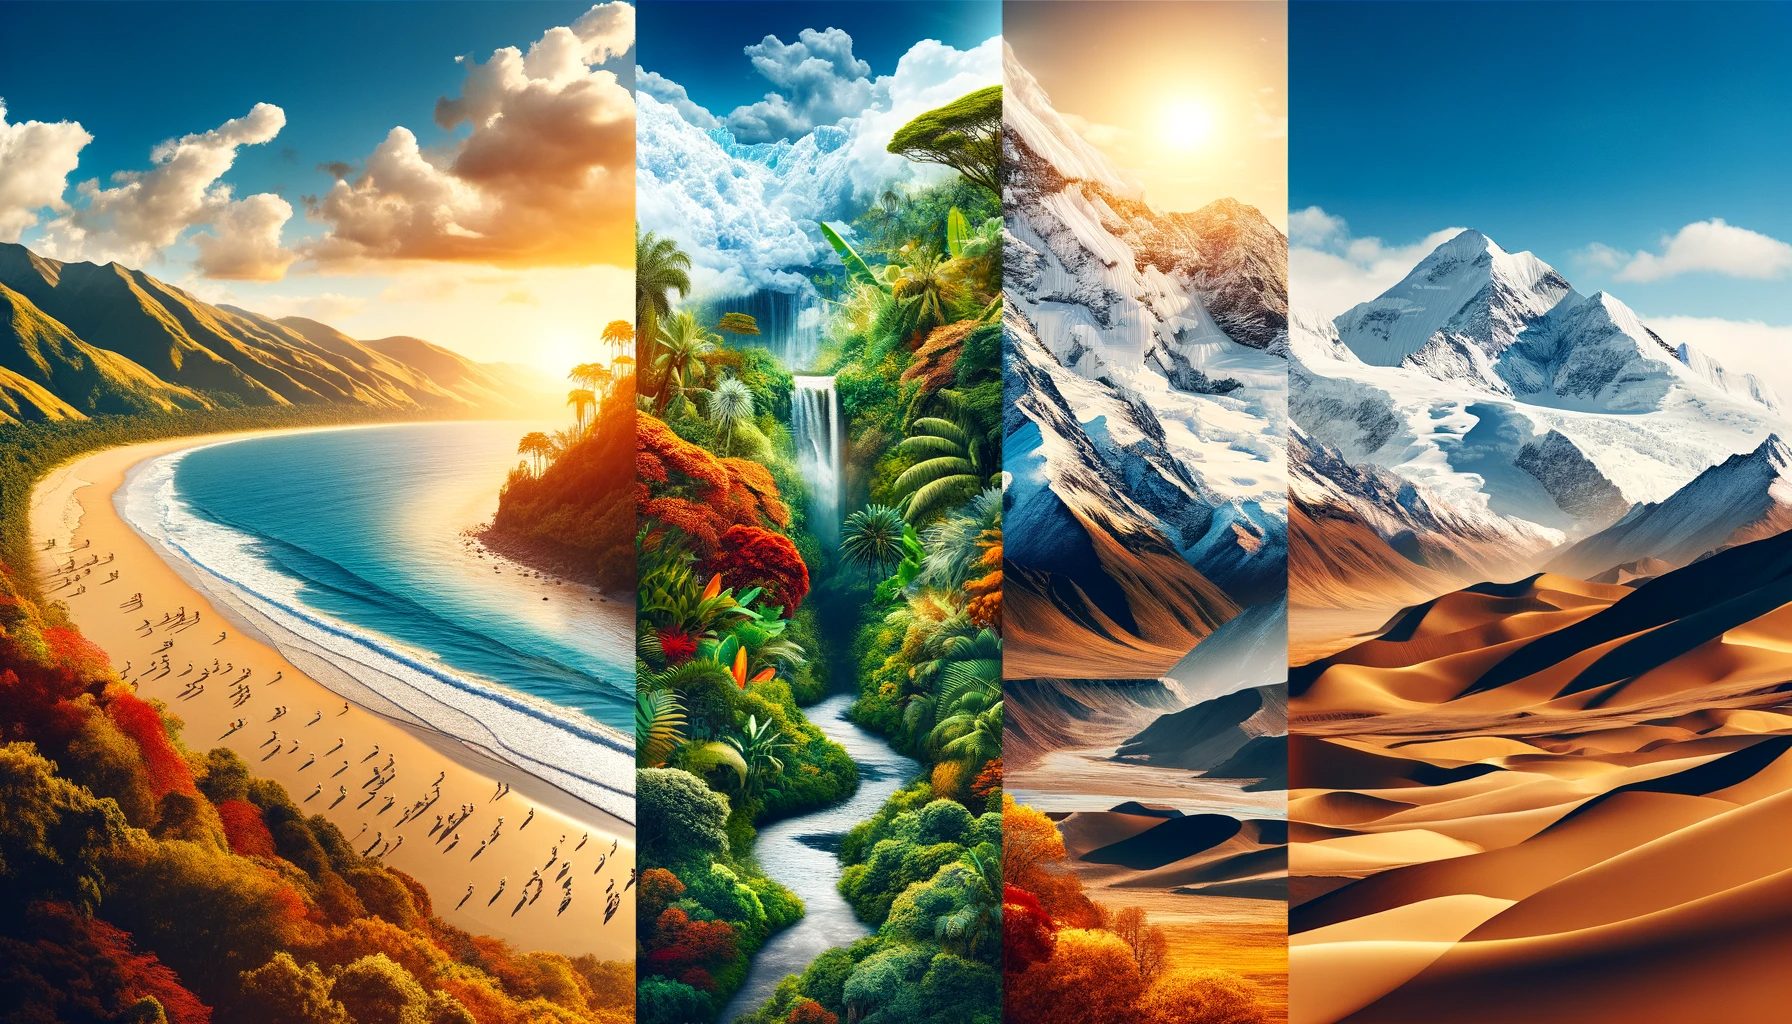 Diverse landscapes: beach, jungle, mountains, and desert scenes.